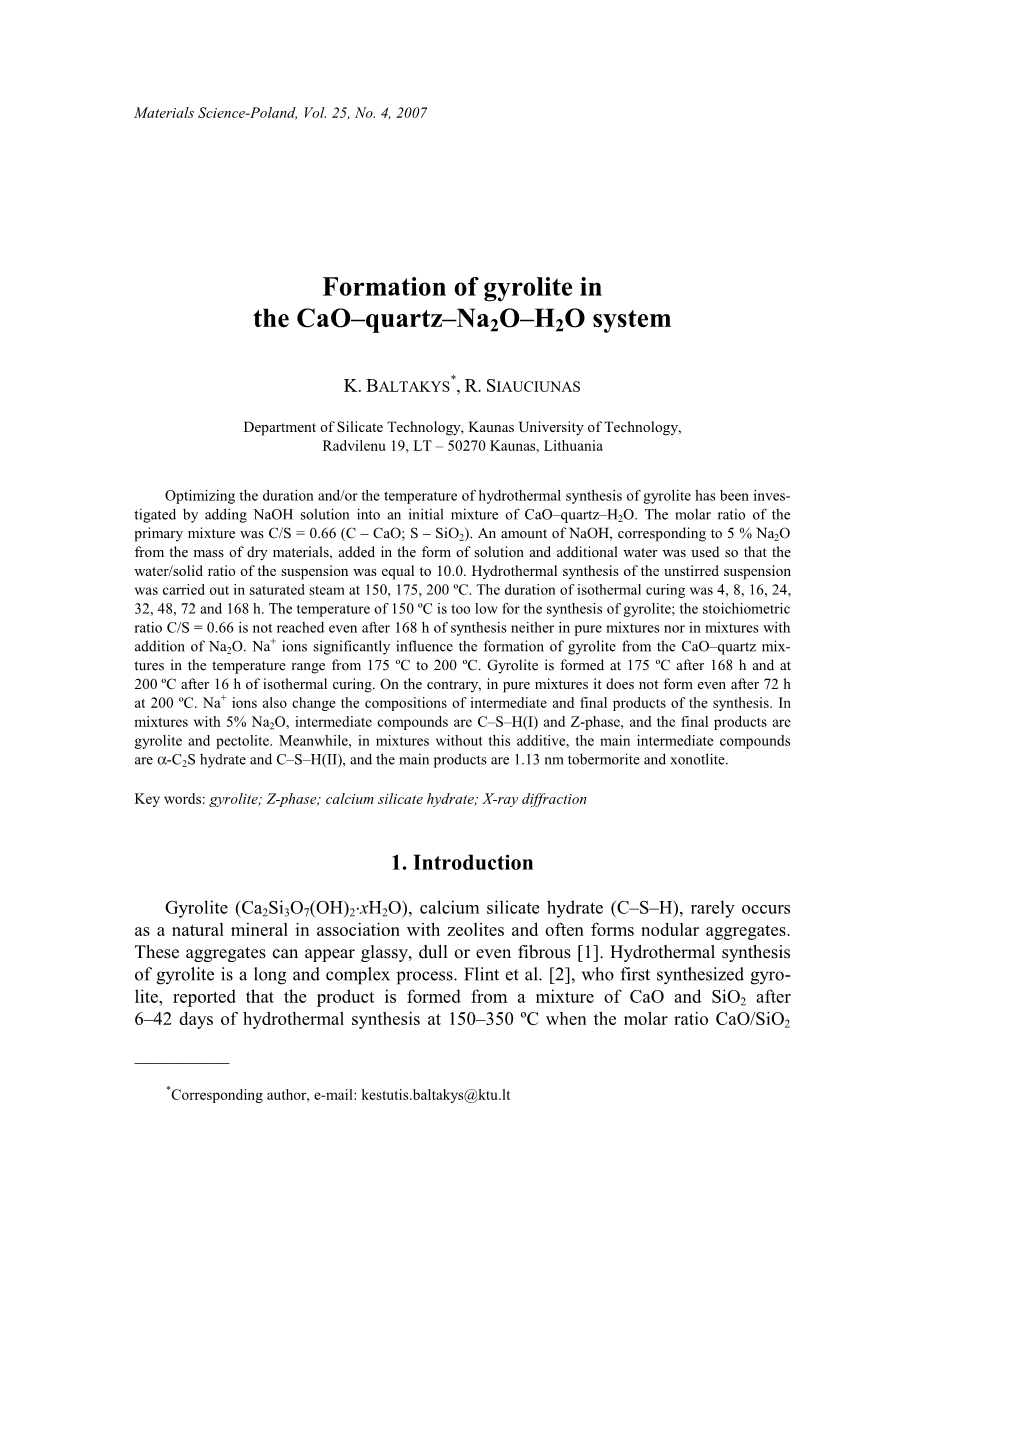 Formation of Gyrolite in the Cao–Quartz–Na2o–H2O System